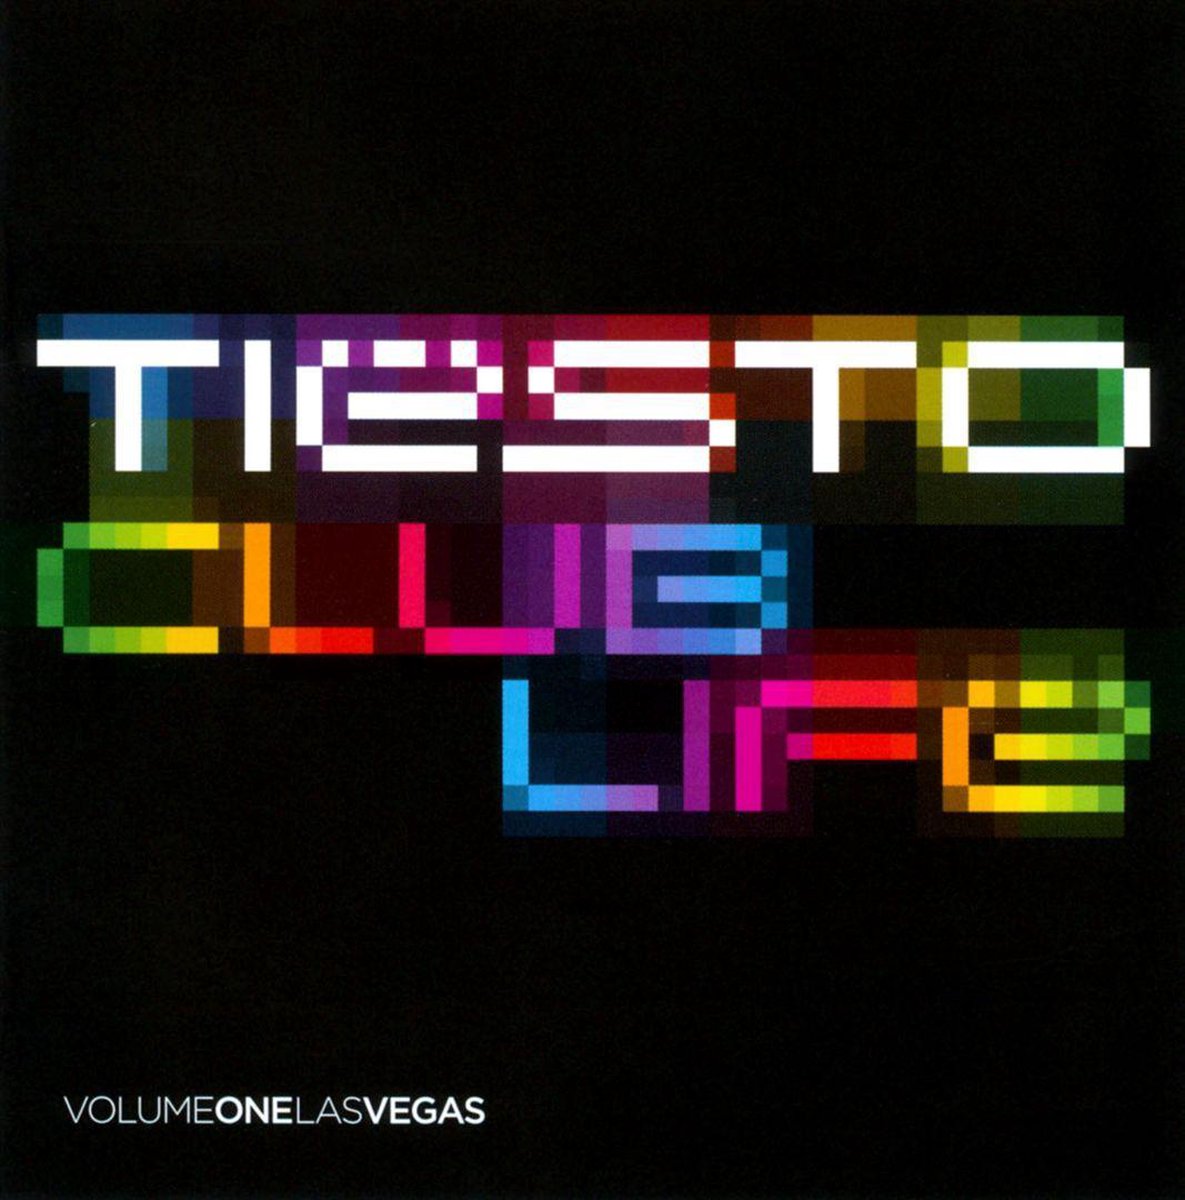 Club Life - Volume One: Las Vegas - various artists